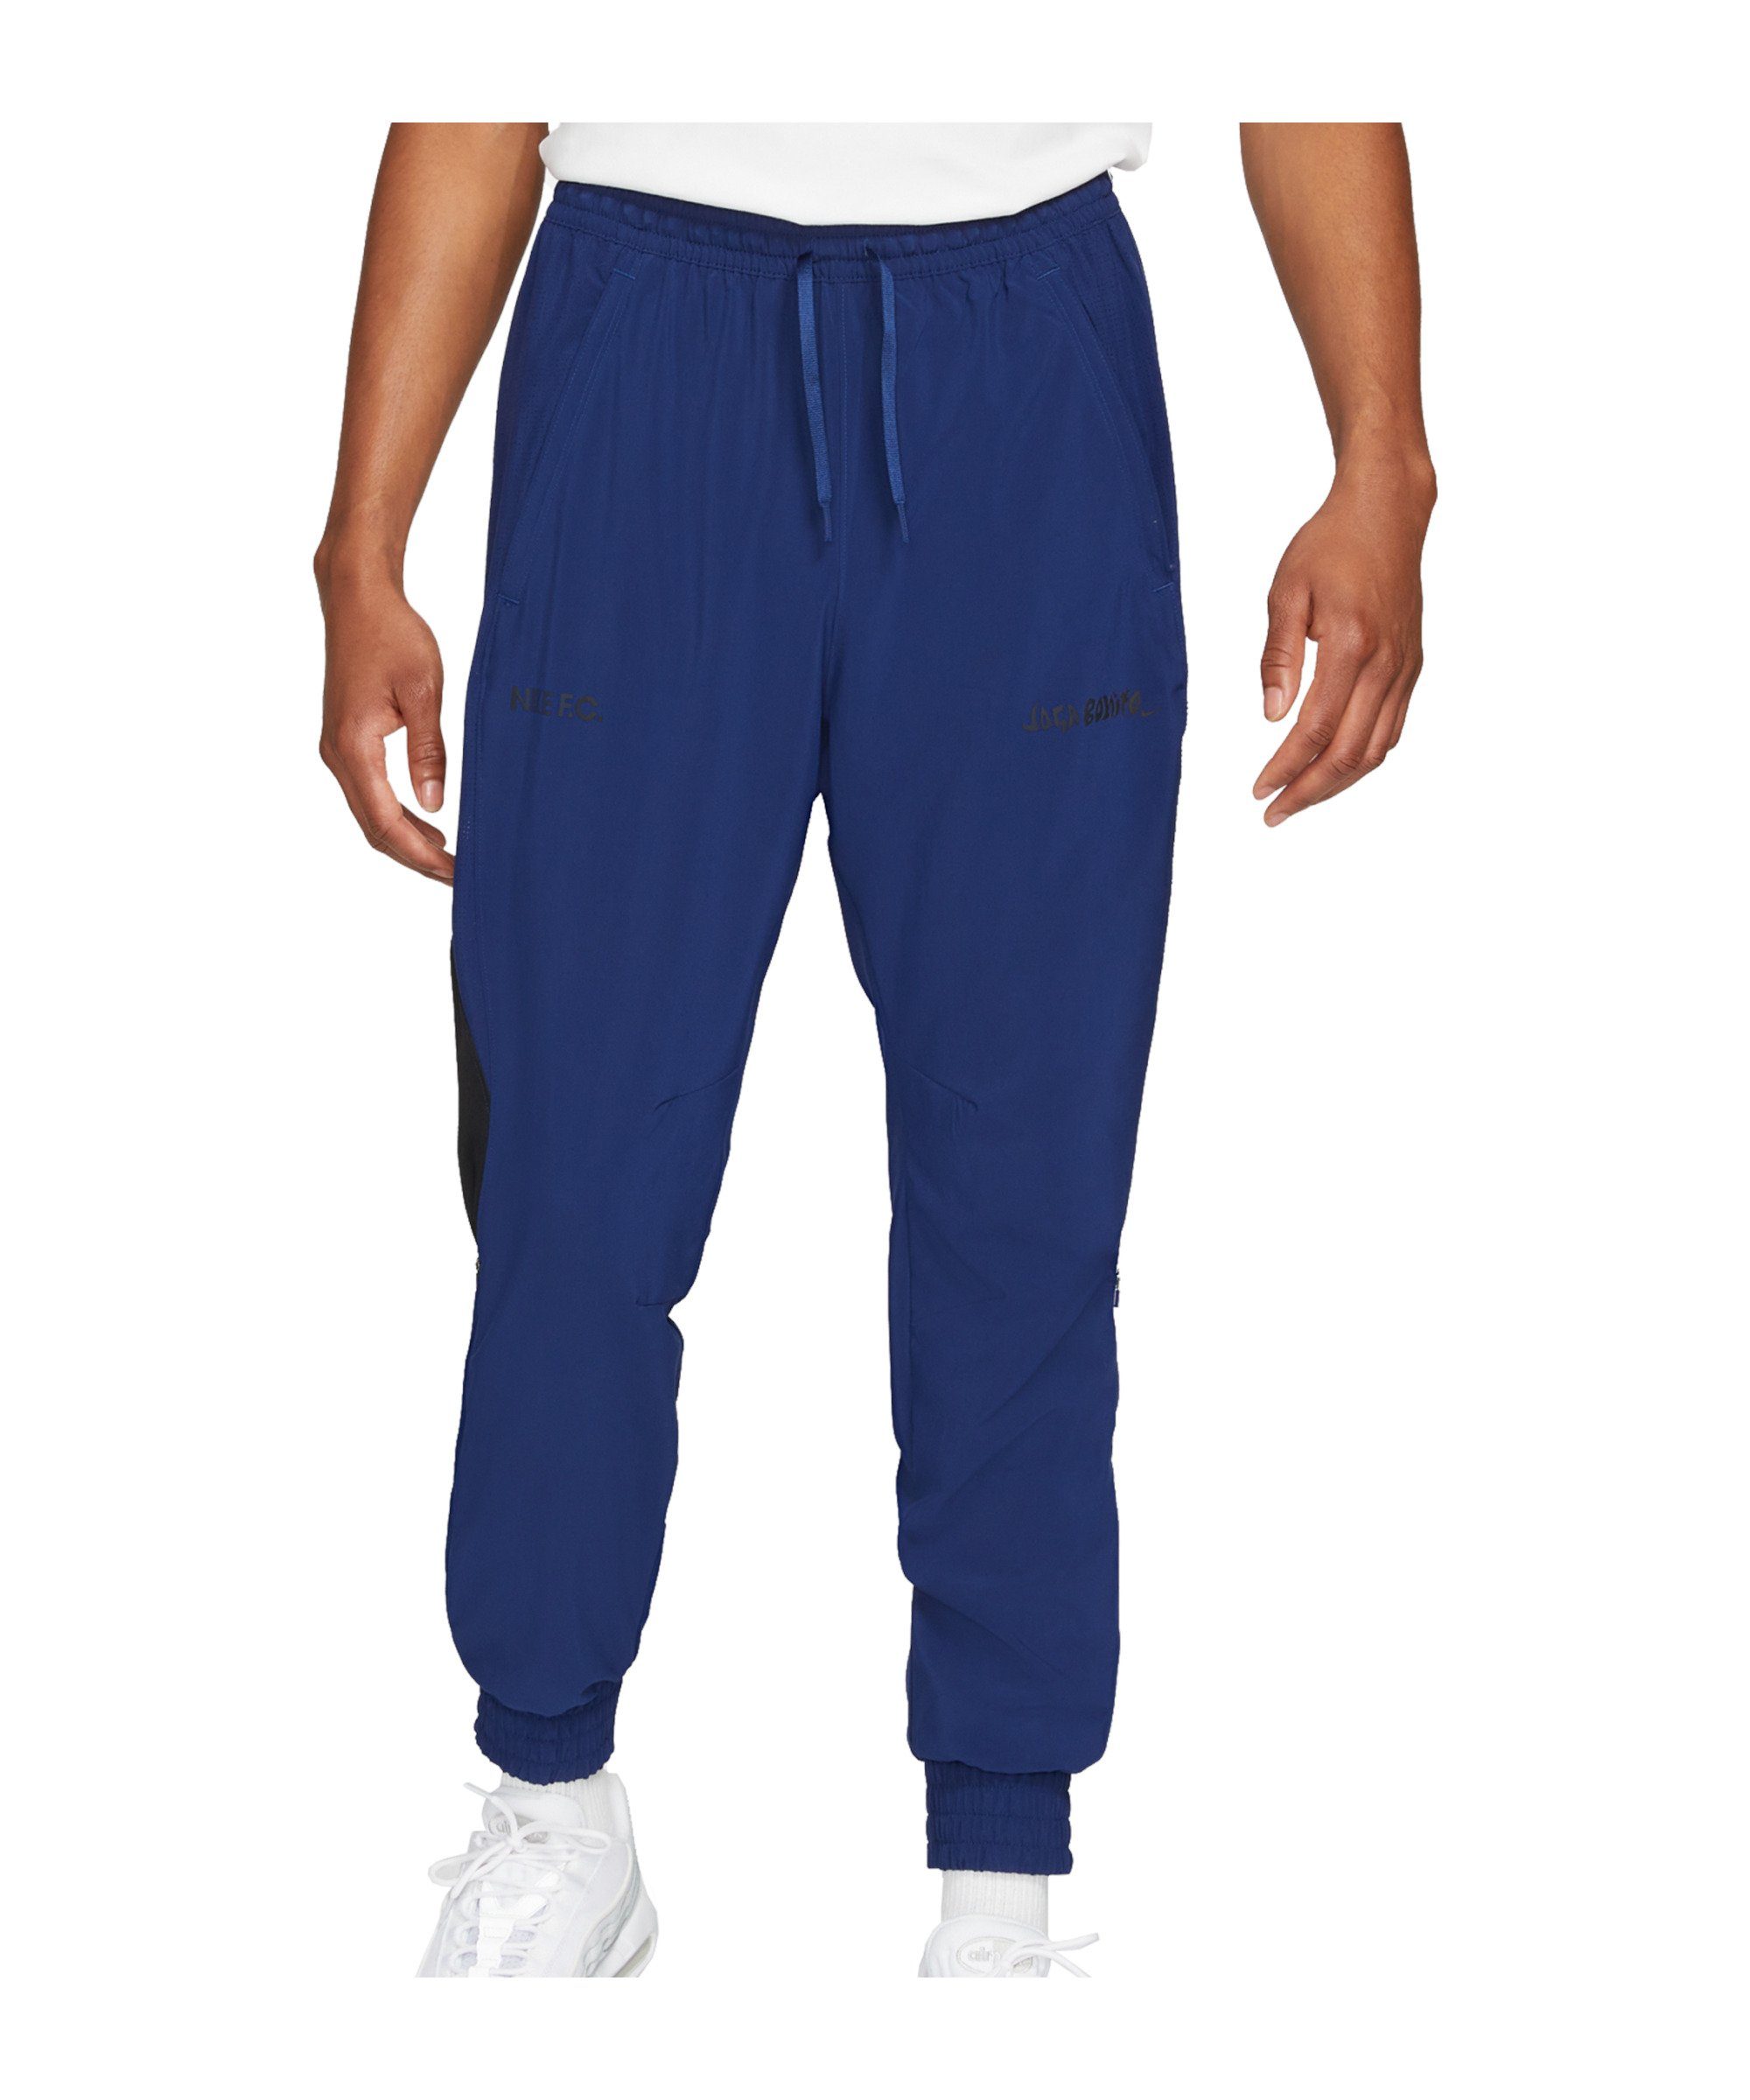 F.C. Woven blauschwarz Hose Sportswear Jogginghose Bonito Nike Joga